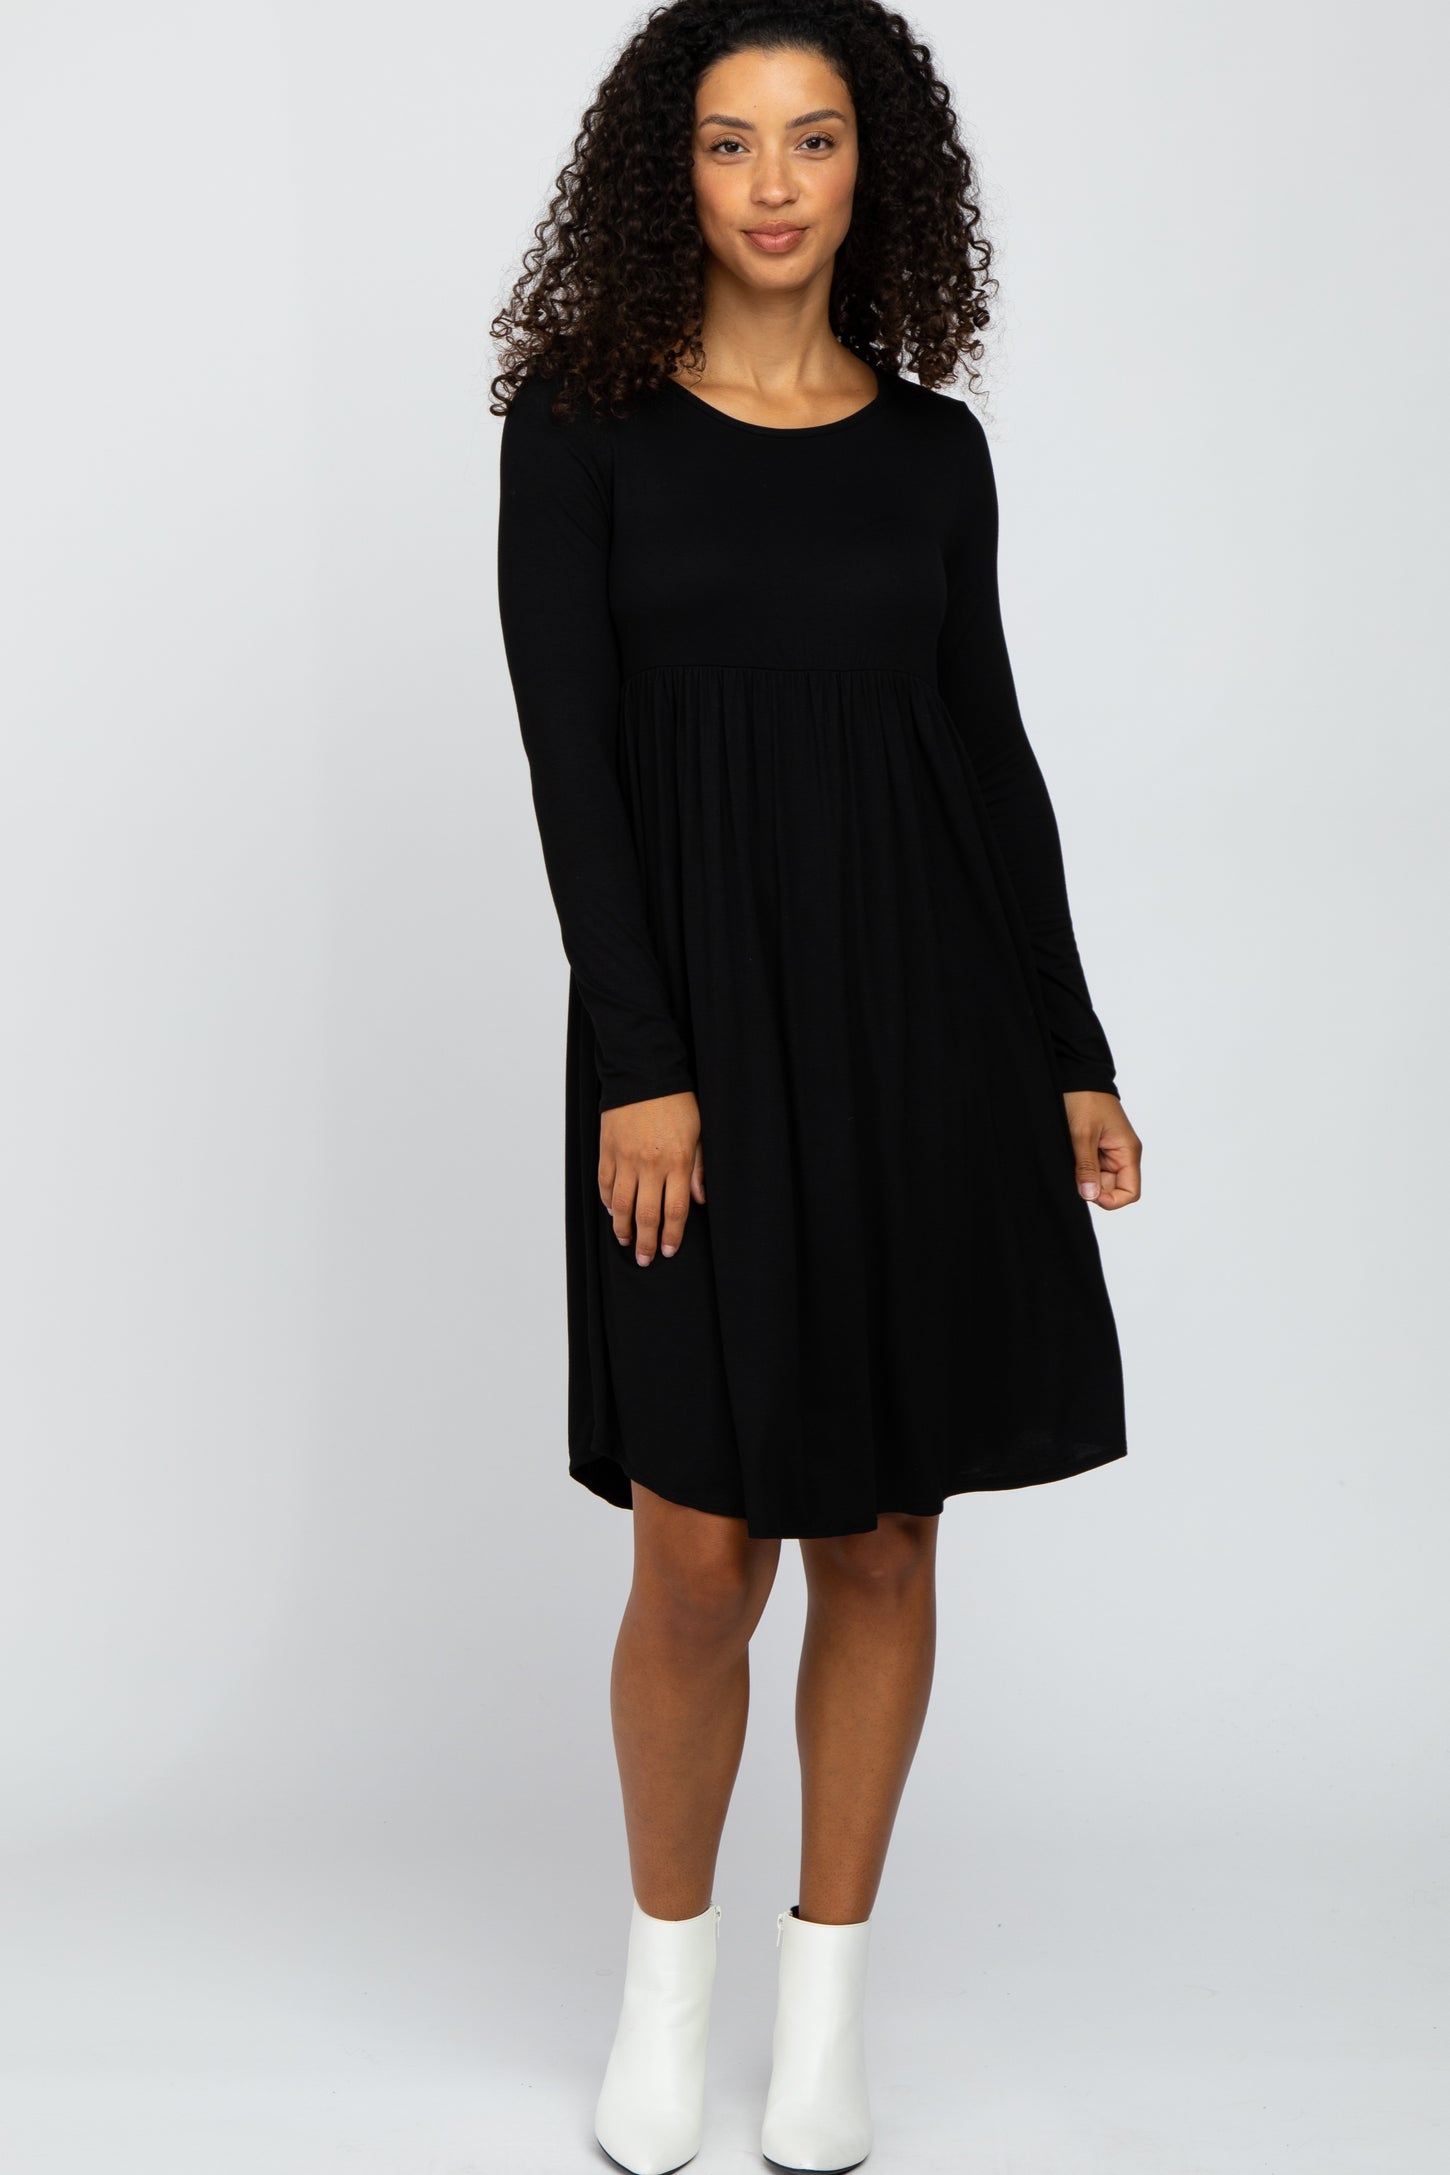 Black 3/4 Sleeve Babydoll Dress